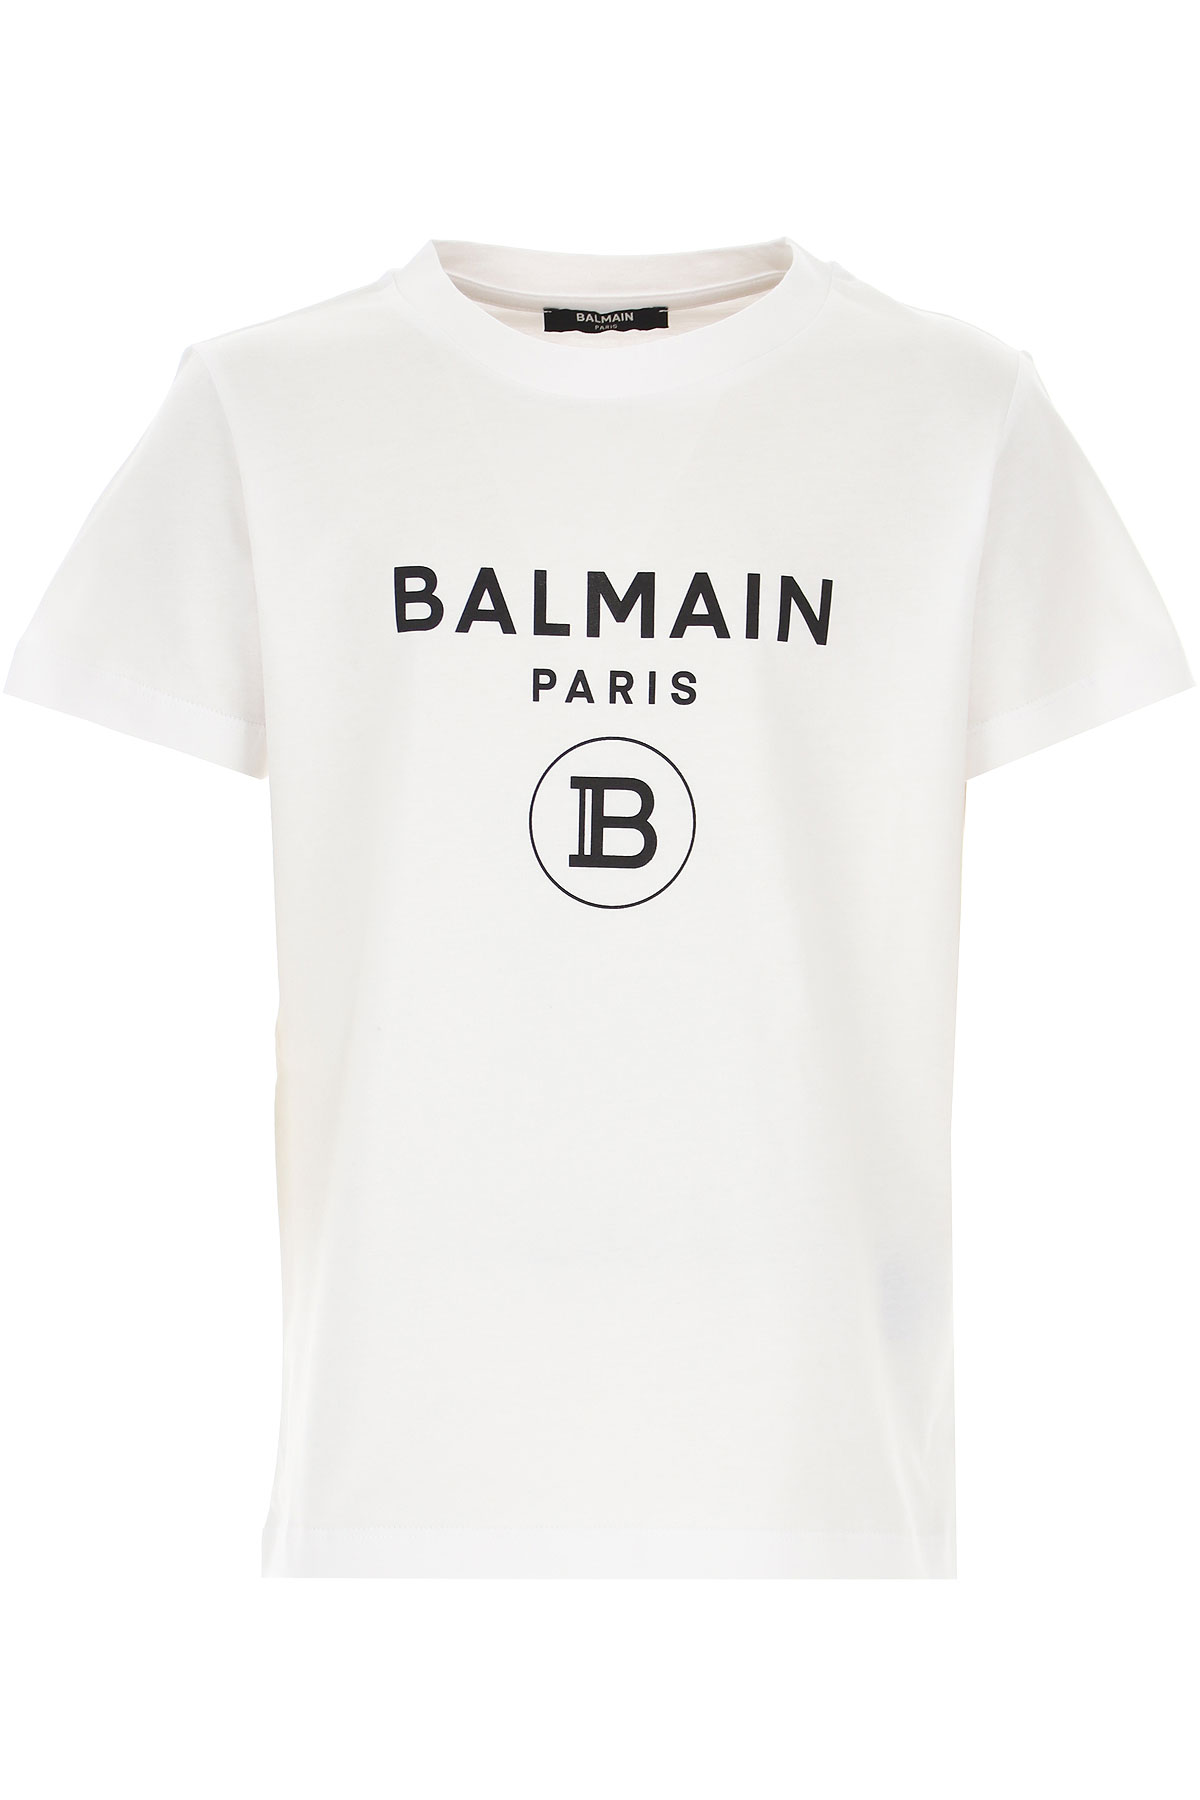 Kidswear Balmain, Style code: 6n8561-nx290-100ne